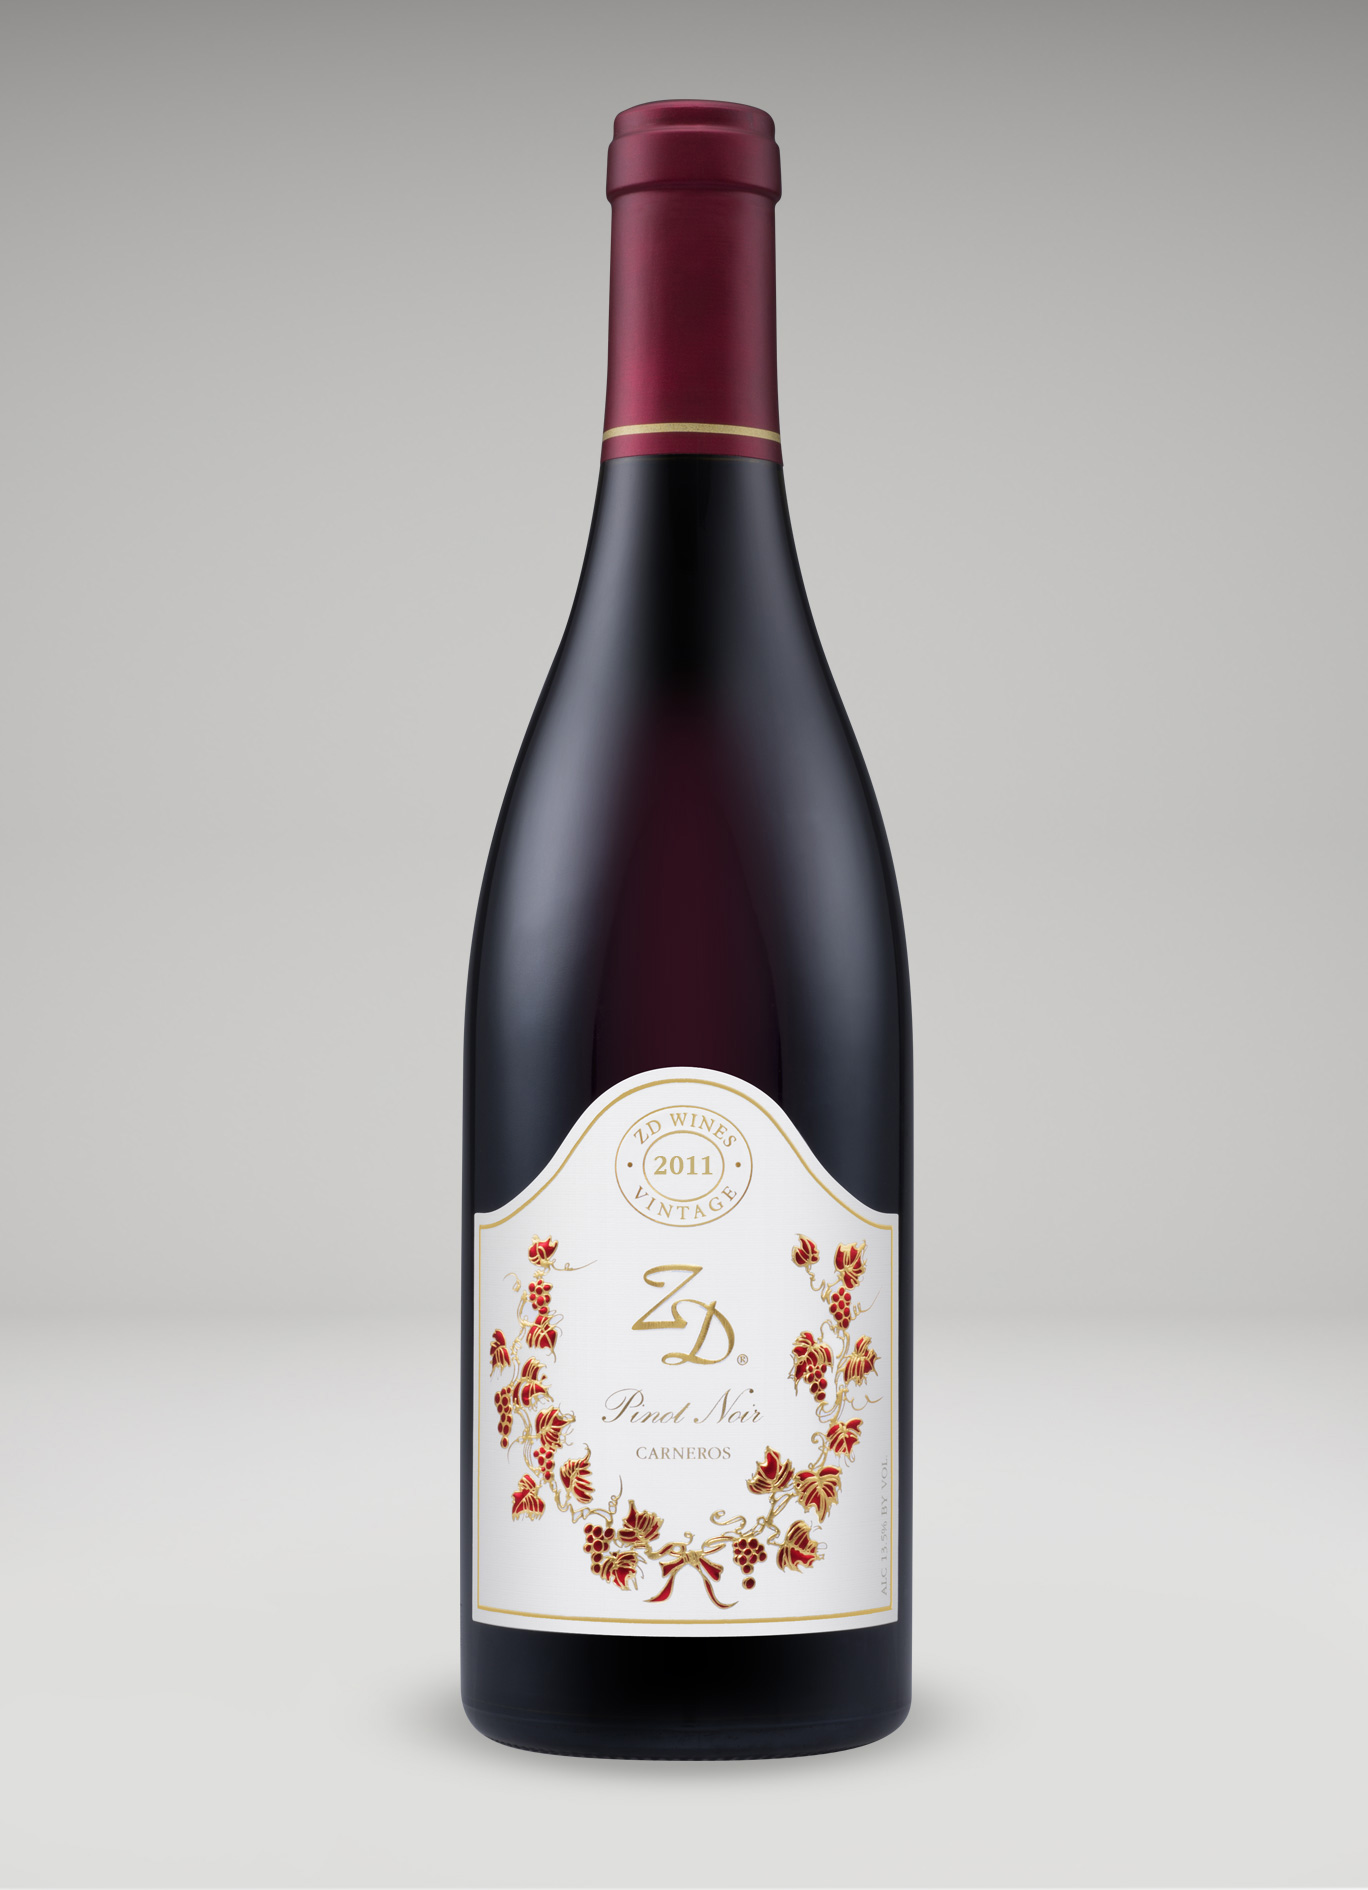 A bottle of 2011 ZD Pinot Noir, Carneros